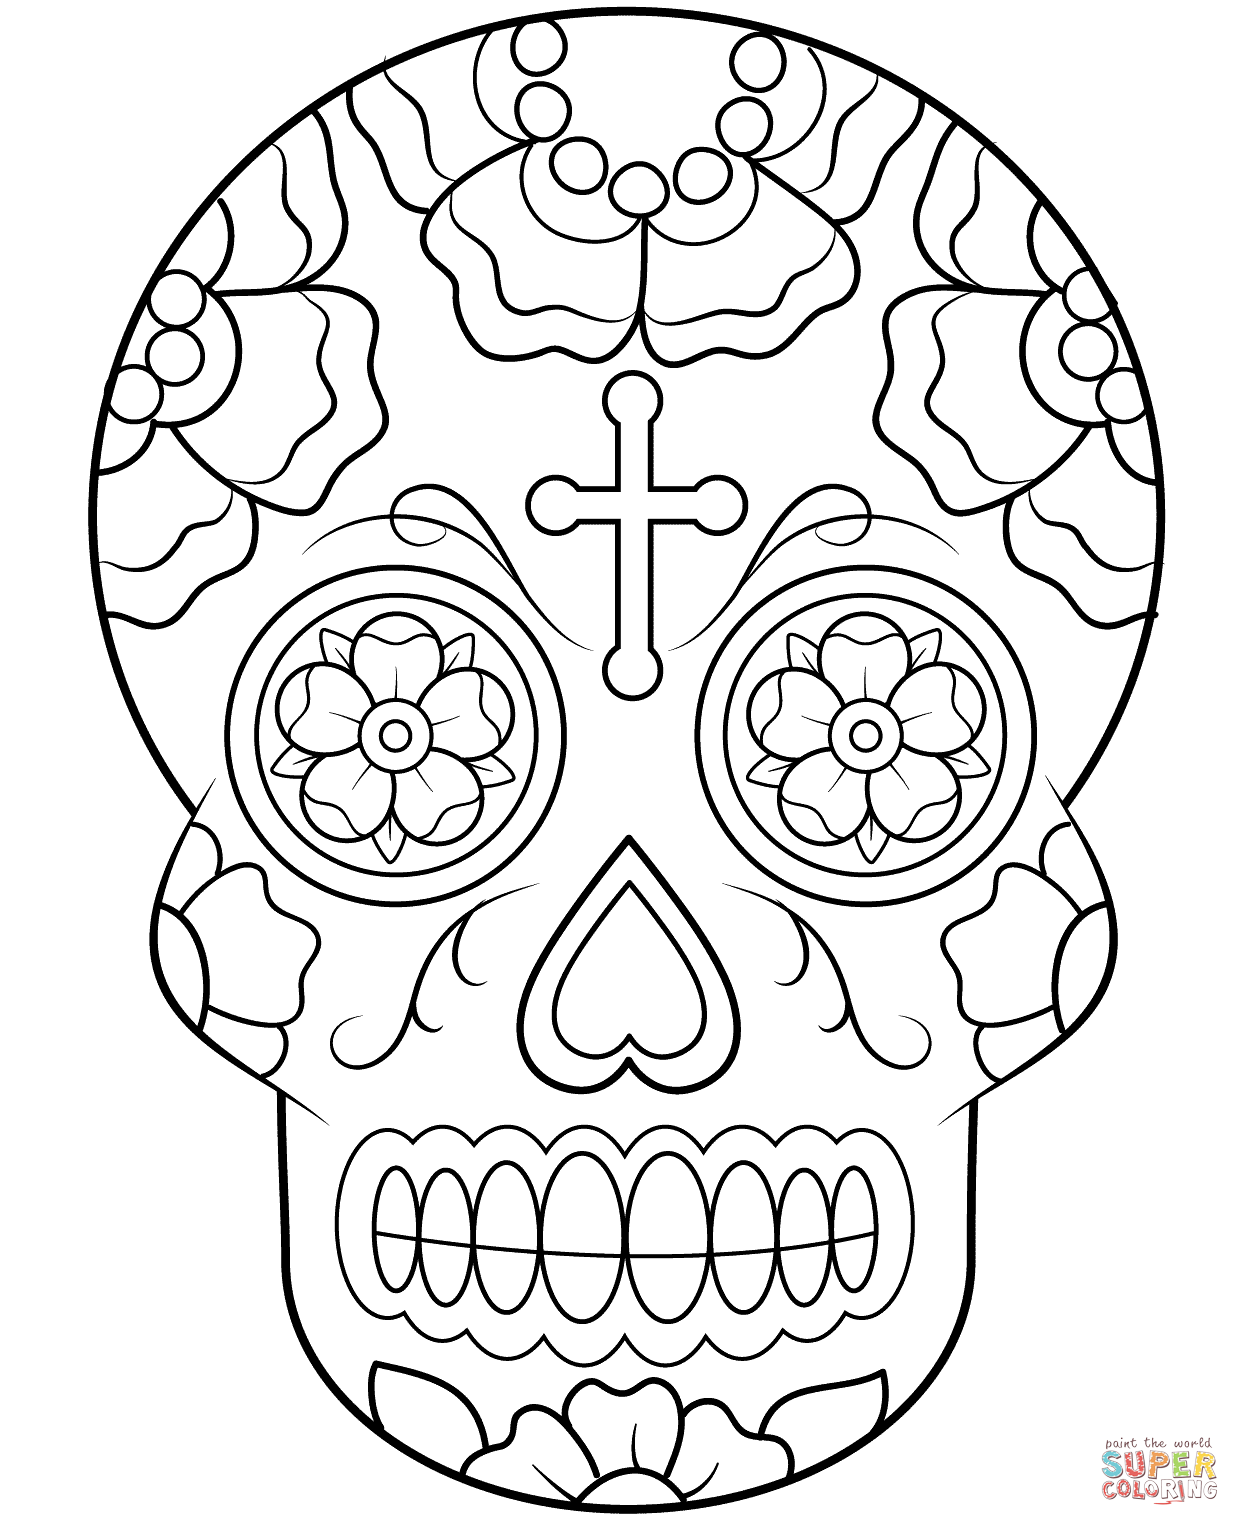 Calavera sugar skull coloring page free printable coloring pages